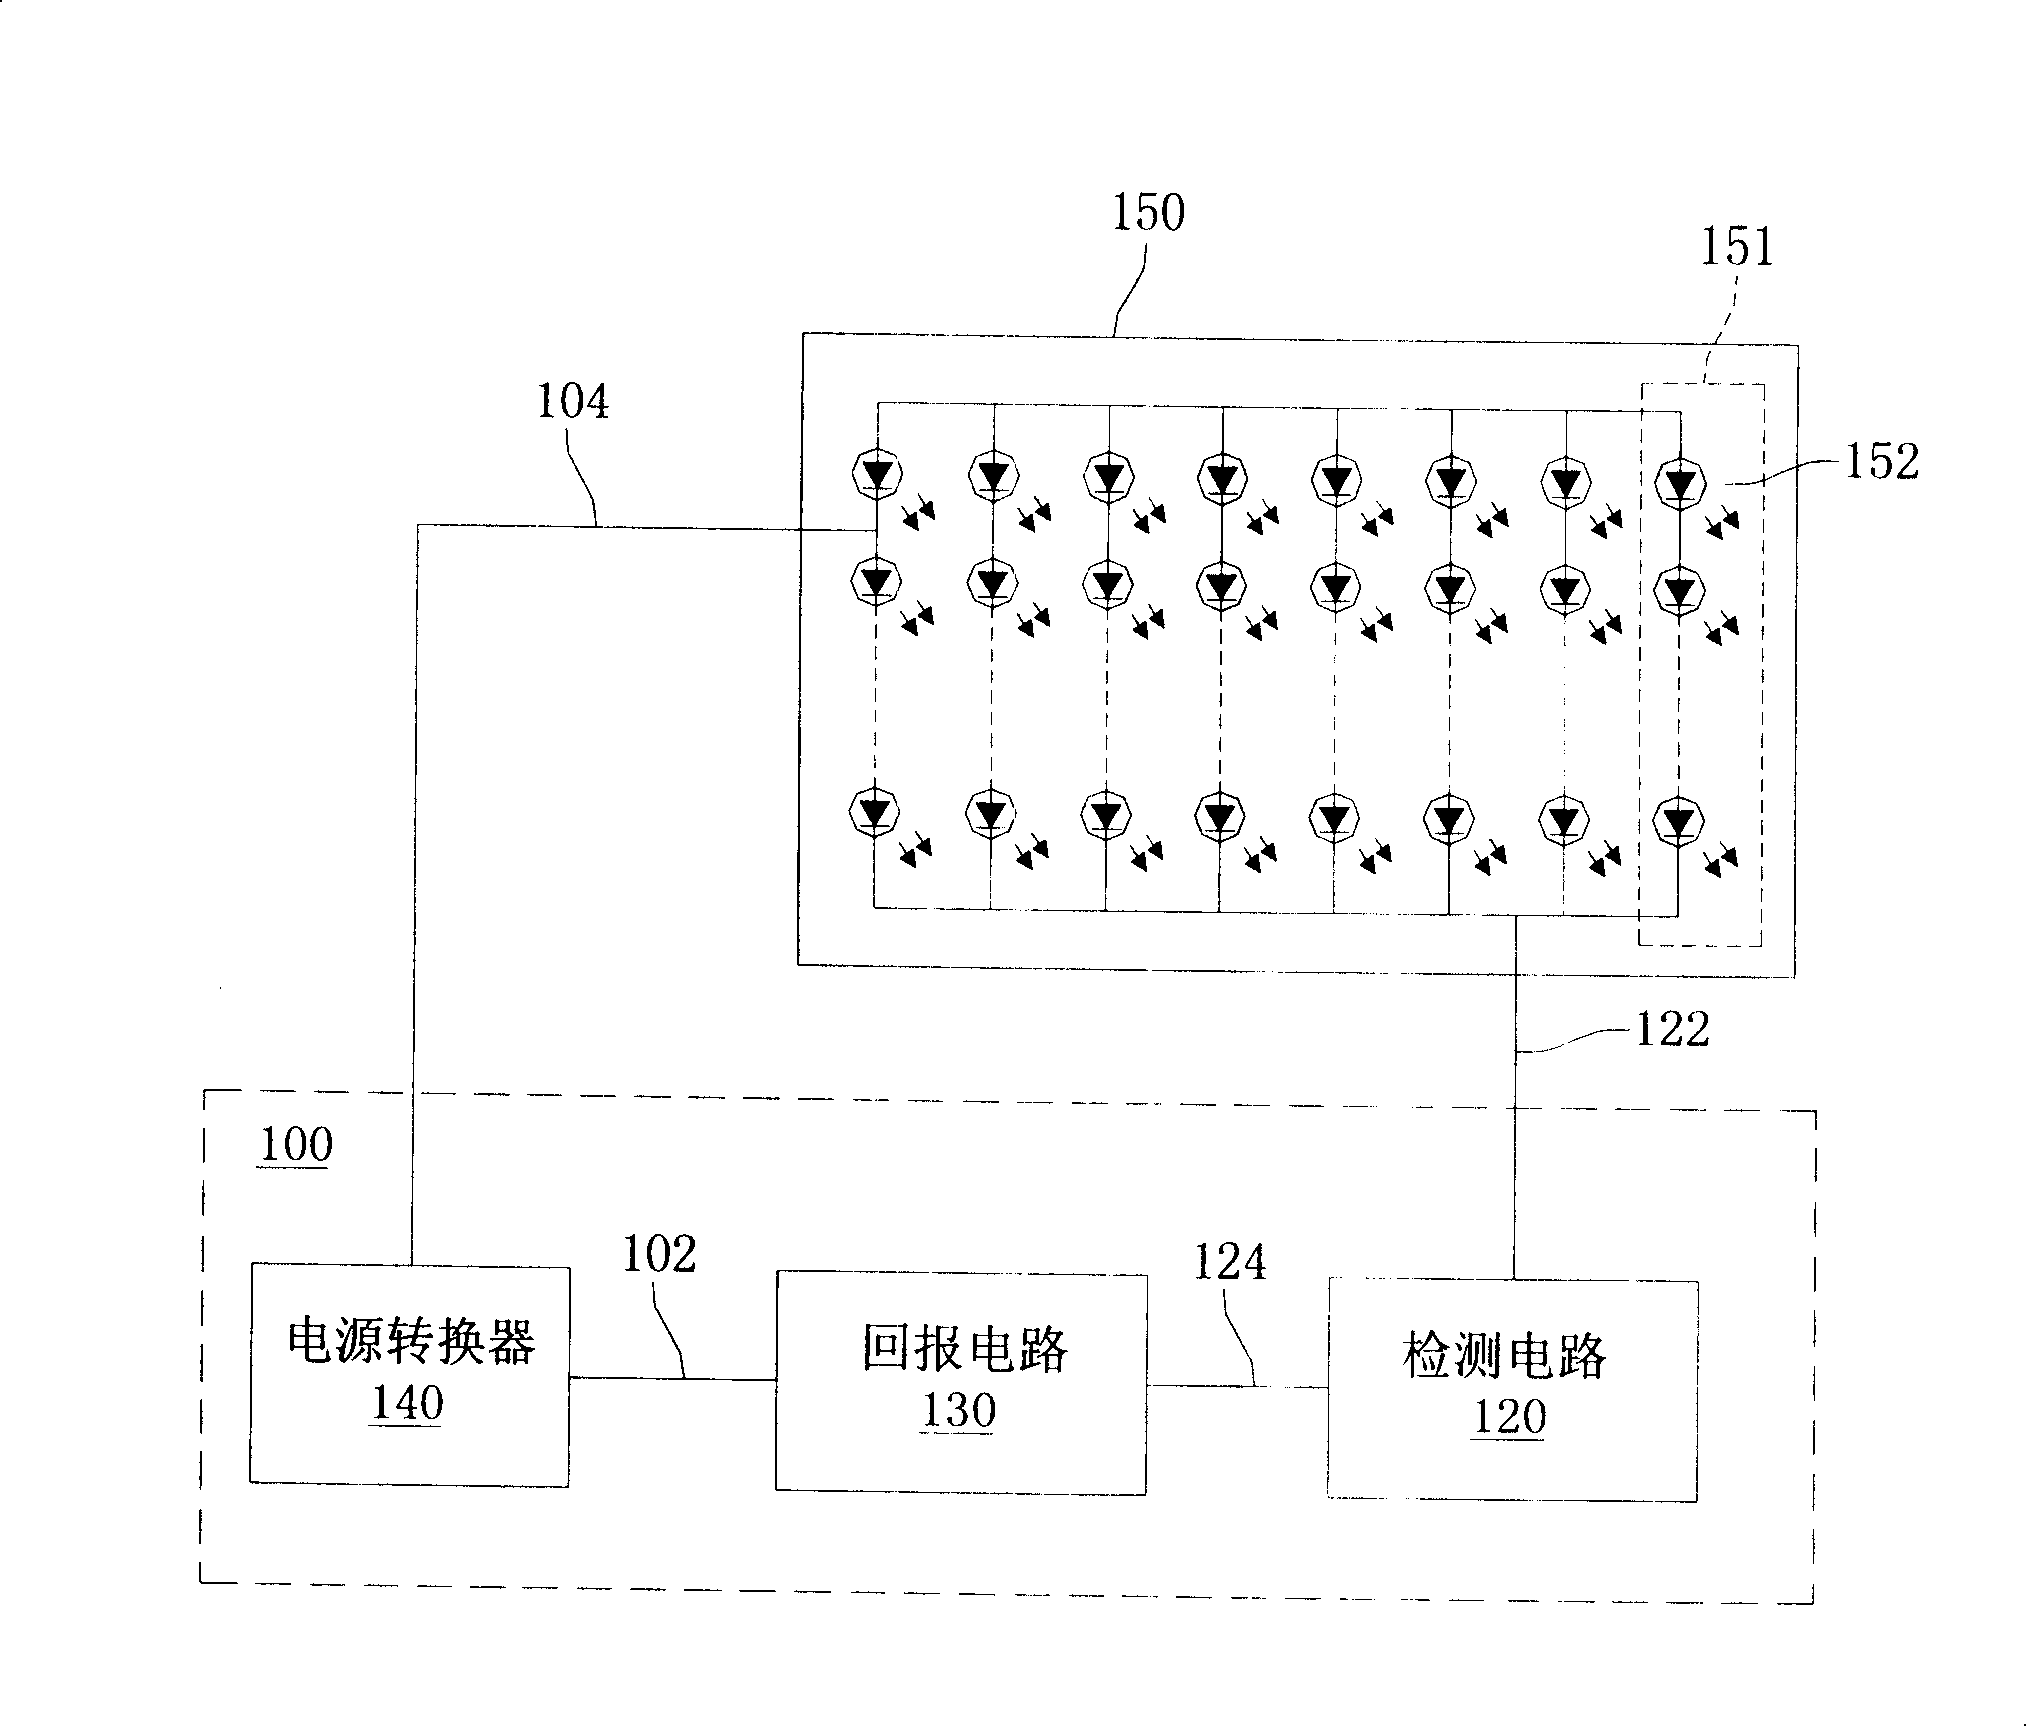 Drive circuit of LED